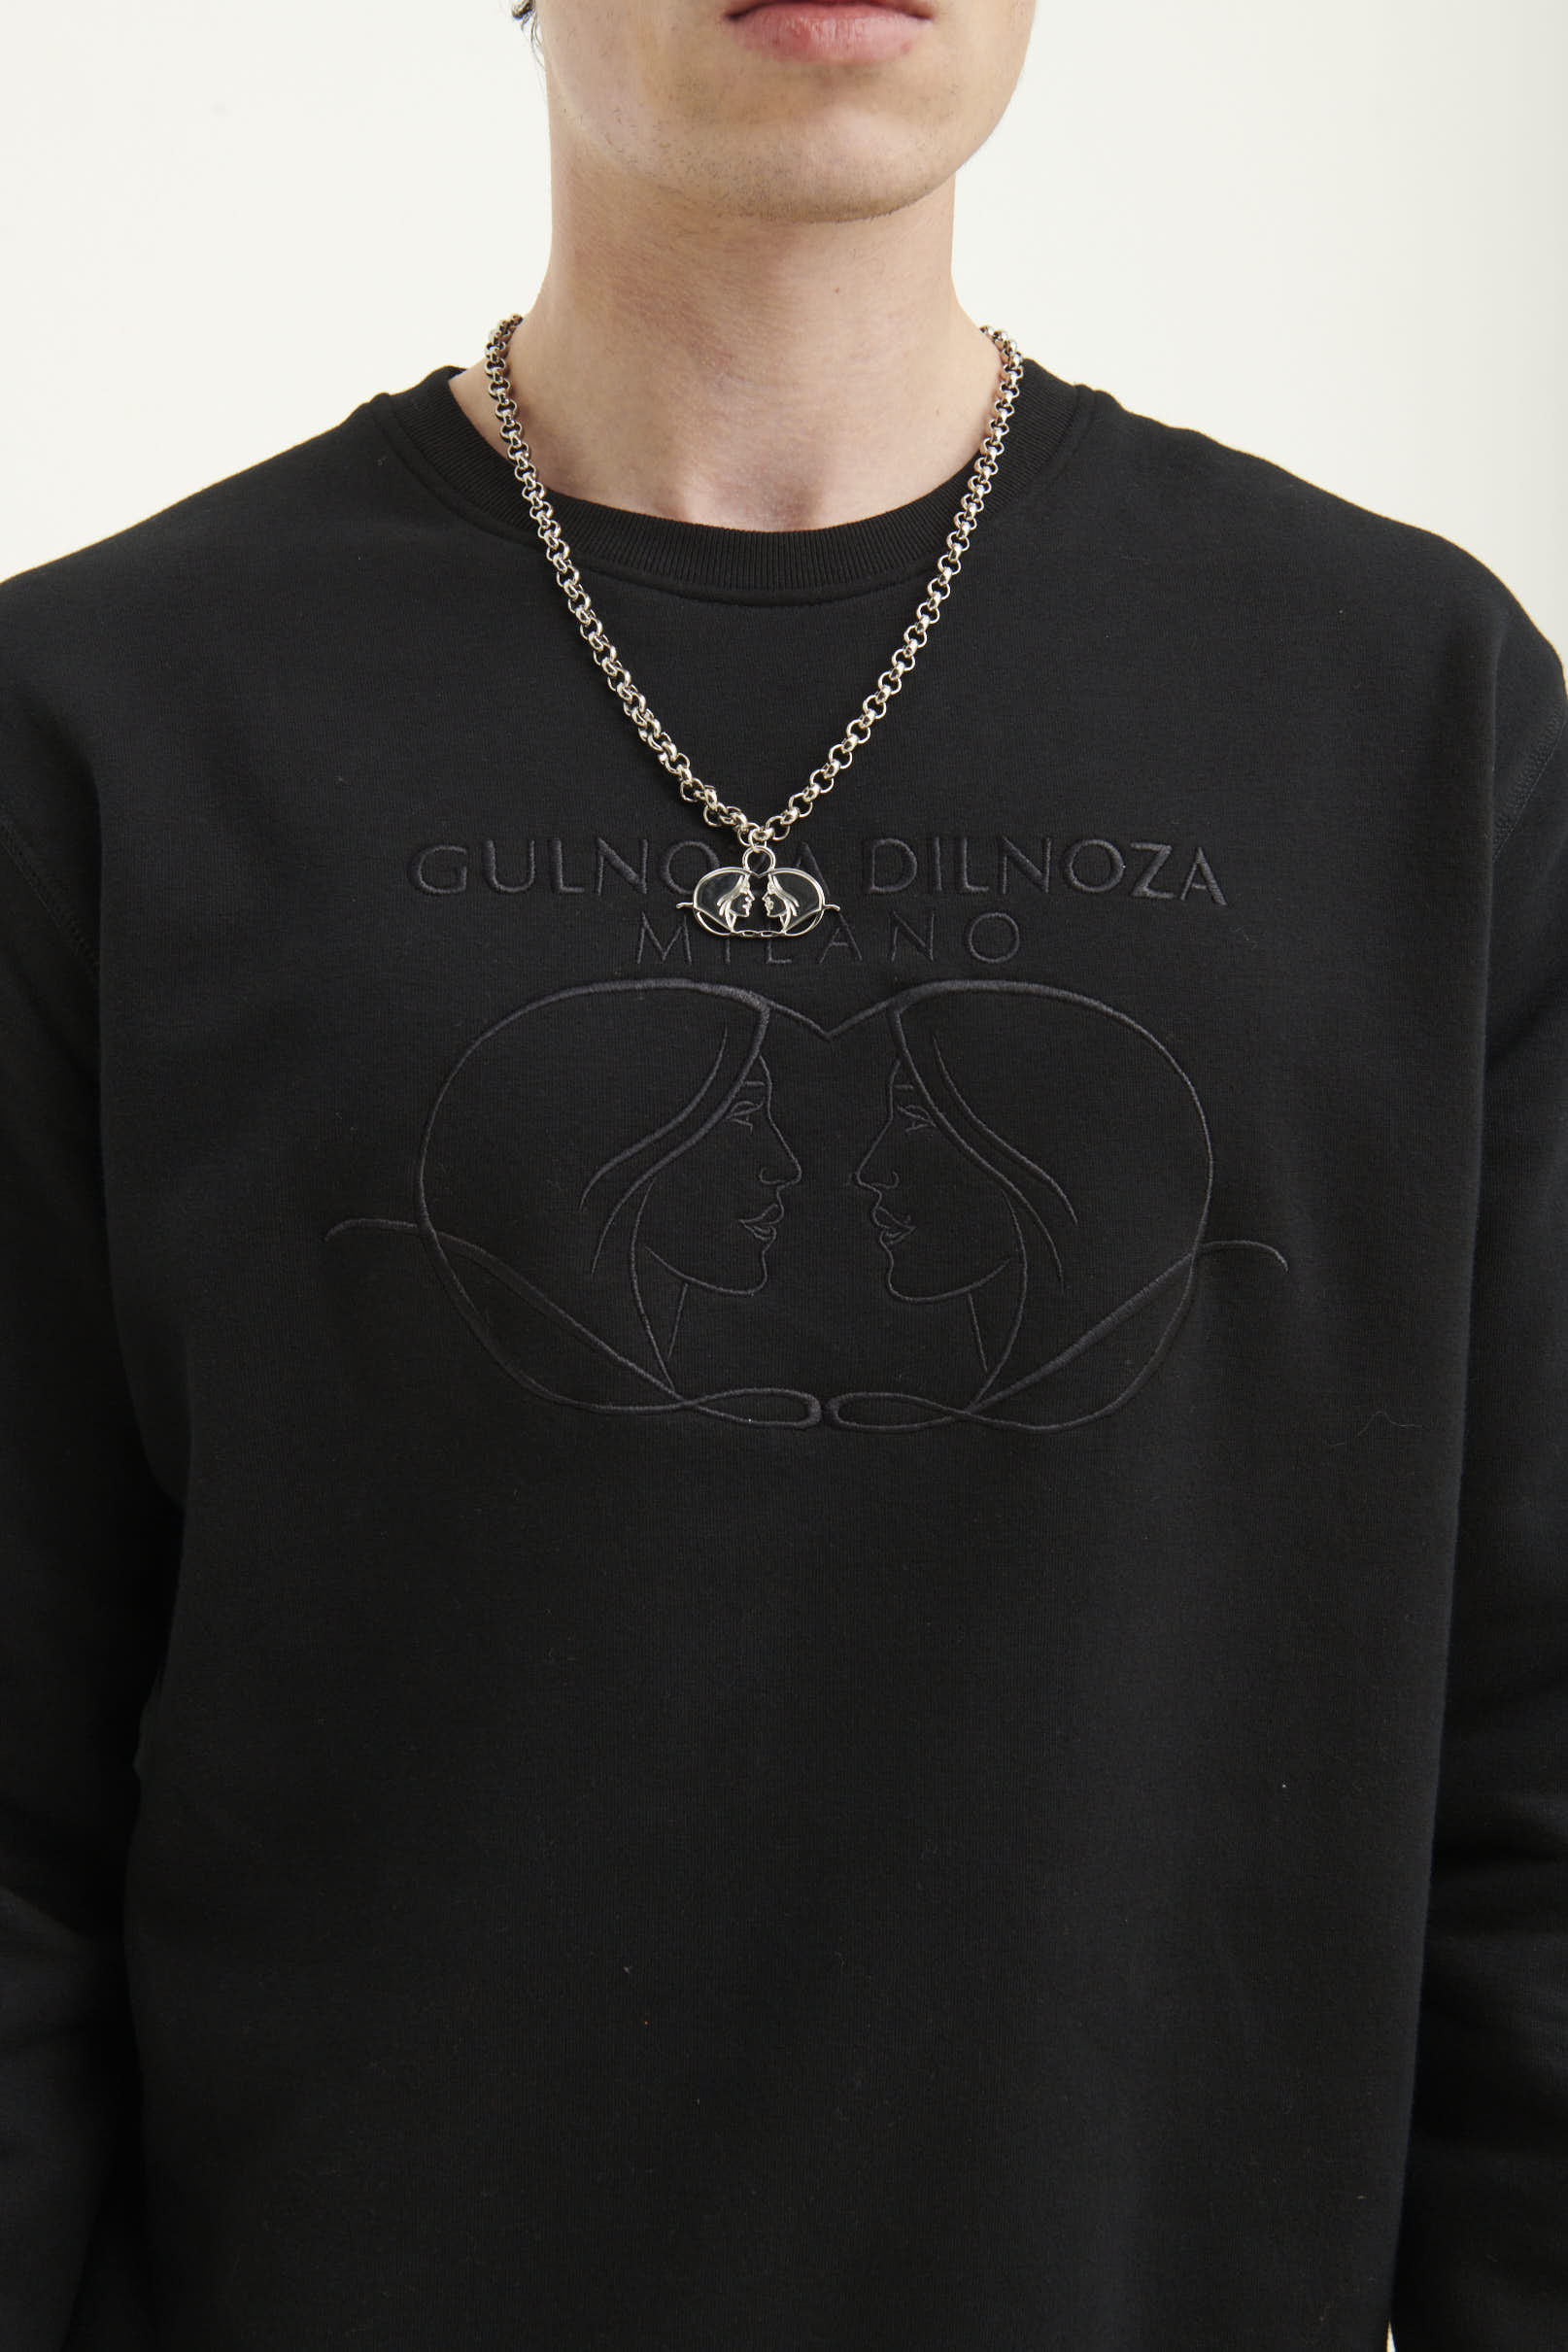 GULNOZA DILNOZA Logo pendant necklace in silver finish metal